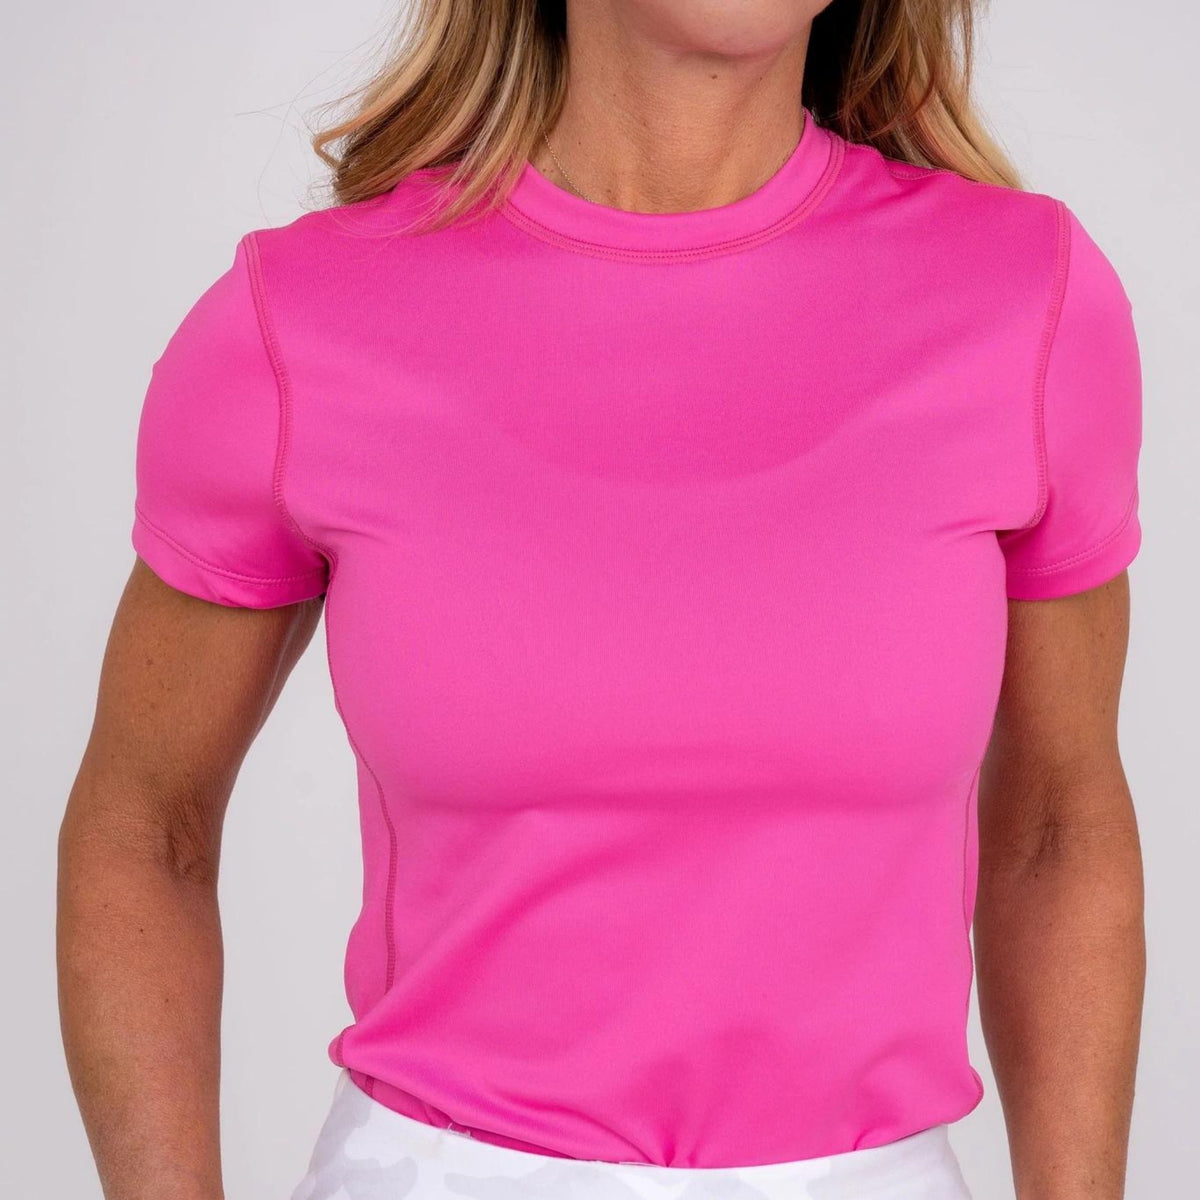 Women's Collarless Athletic Top - Pink - Fairway Fittings